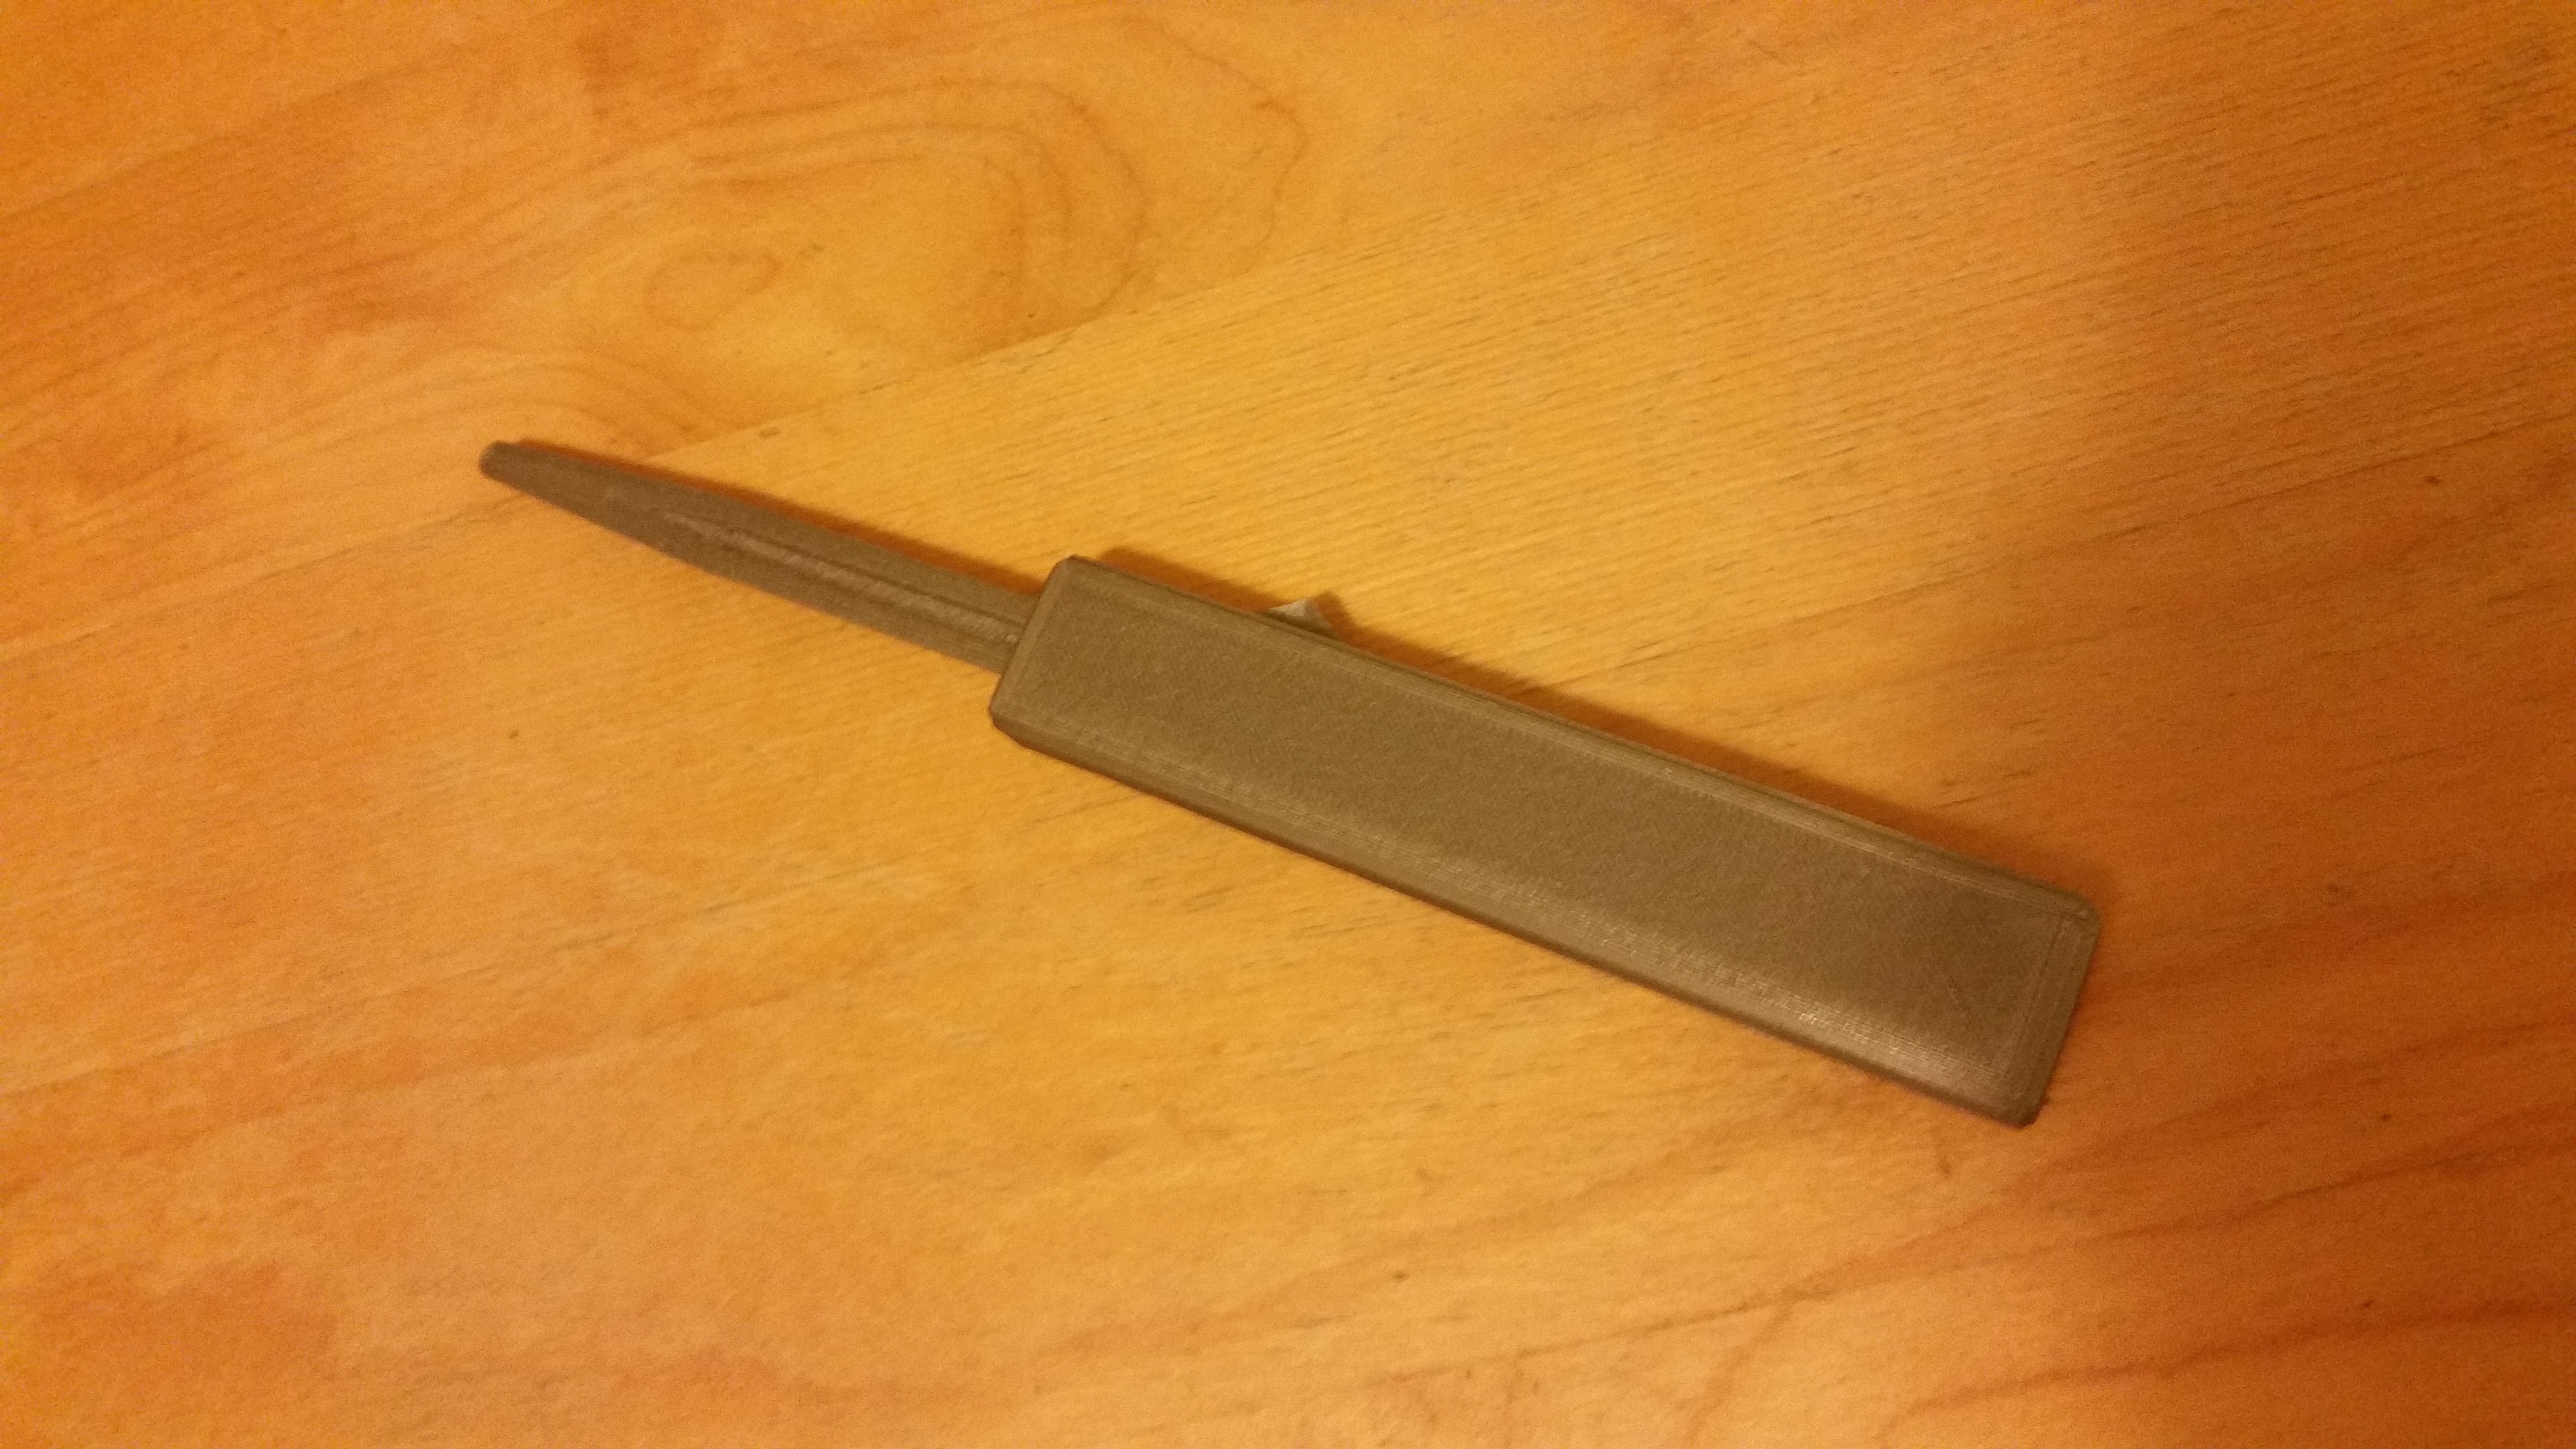 Autoblade (otf / flick) knife 3D Print 101621